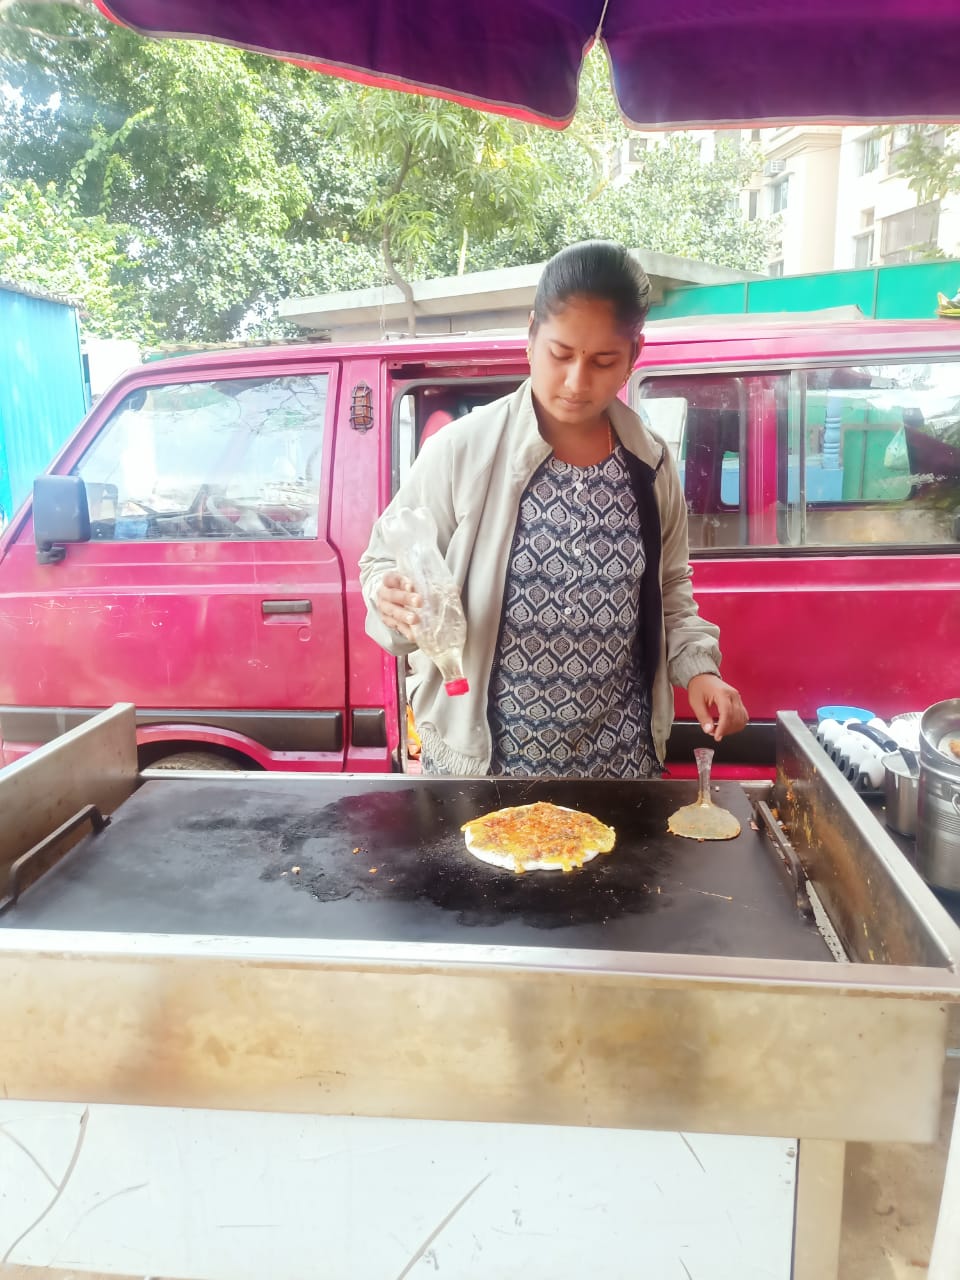 Veena runs 'Kari Dosa', a food cart in JP Nagar, Bengaluru